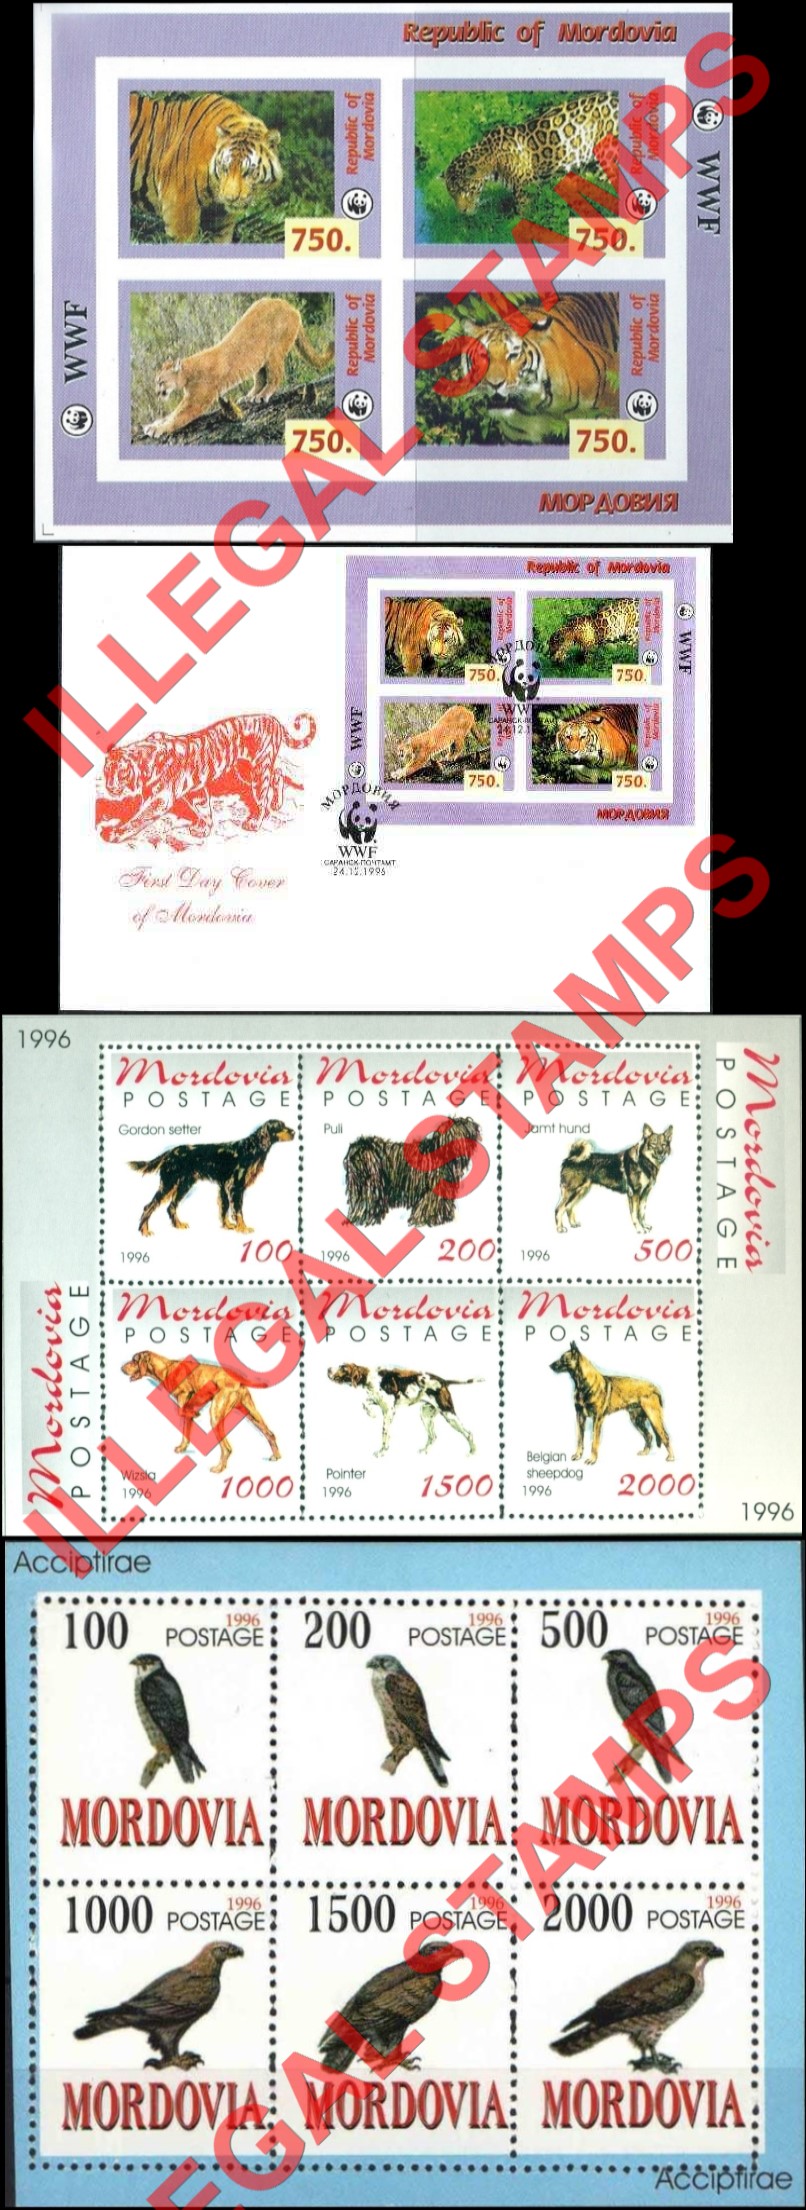 Republic of Mordovia 1996 Counterfeit Illegal Stamps